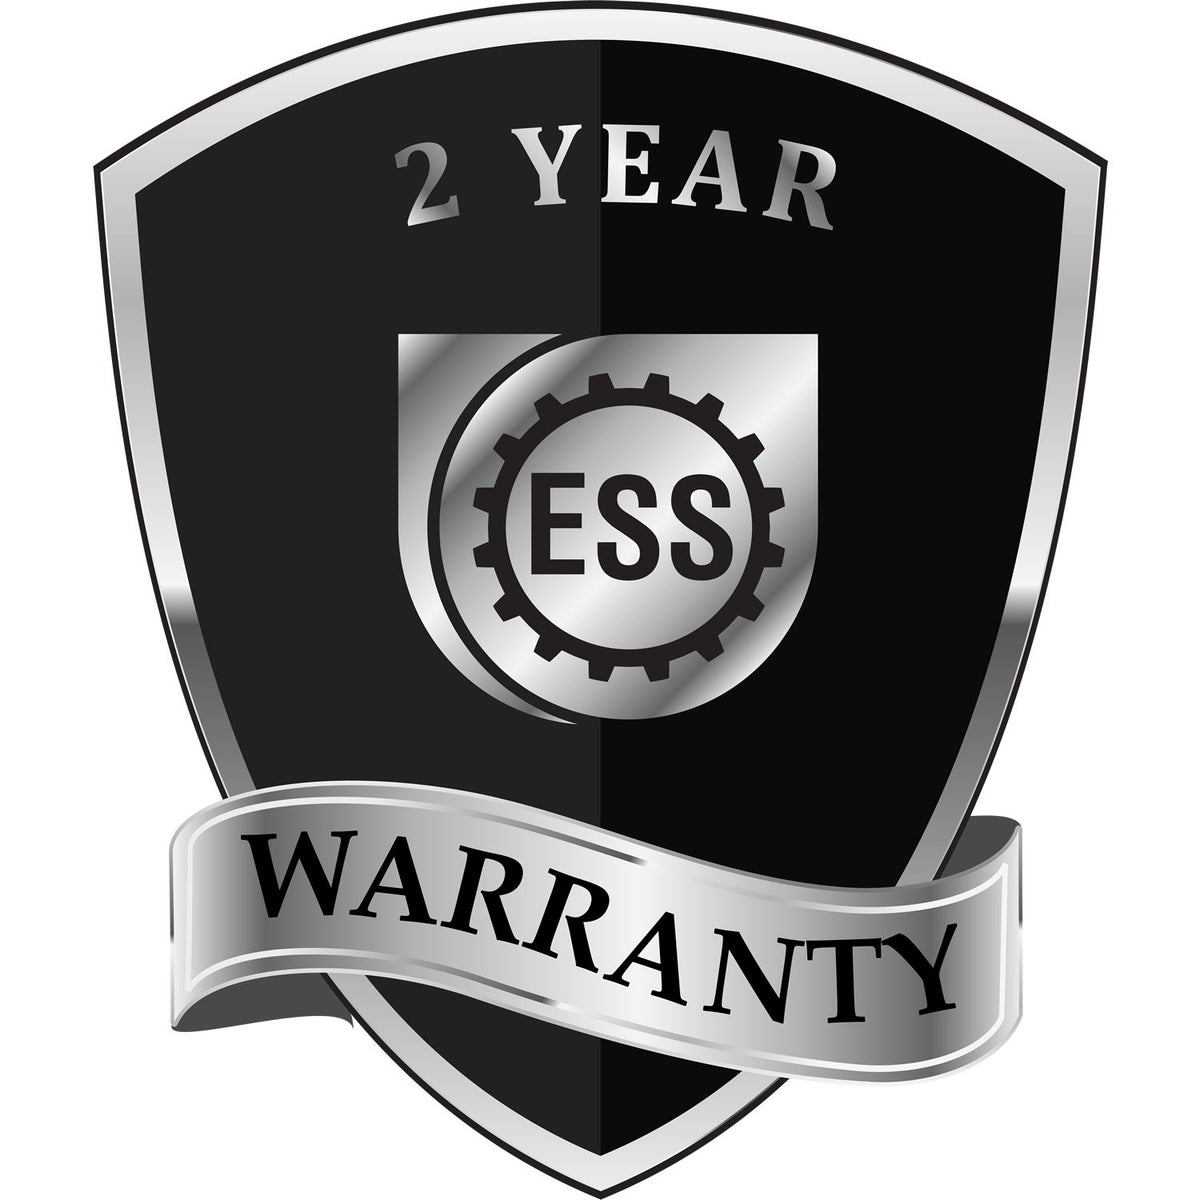 A black and silver badge or emblem showing warranty information for the Gift Nebraska Landscape Architect Seal